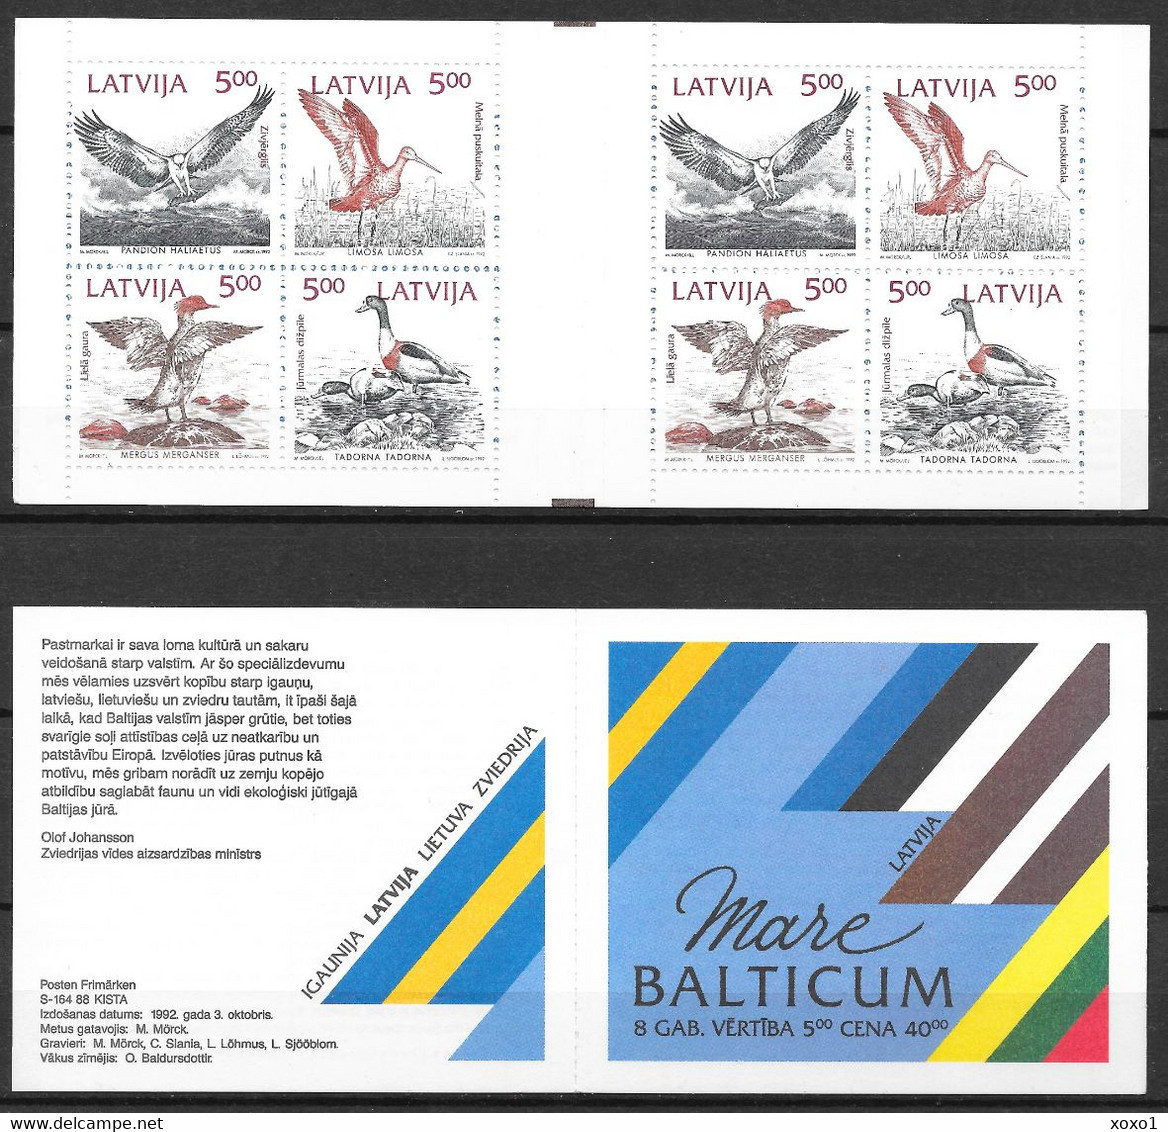 LATVIA 1992 MiNr. 340 - 343 Lettland Joint Issues BIRDS  DUCKS,  EAGLE 8v BOOKLET Mnh ** 6,00 € - Lettland